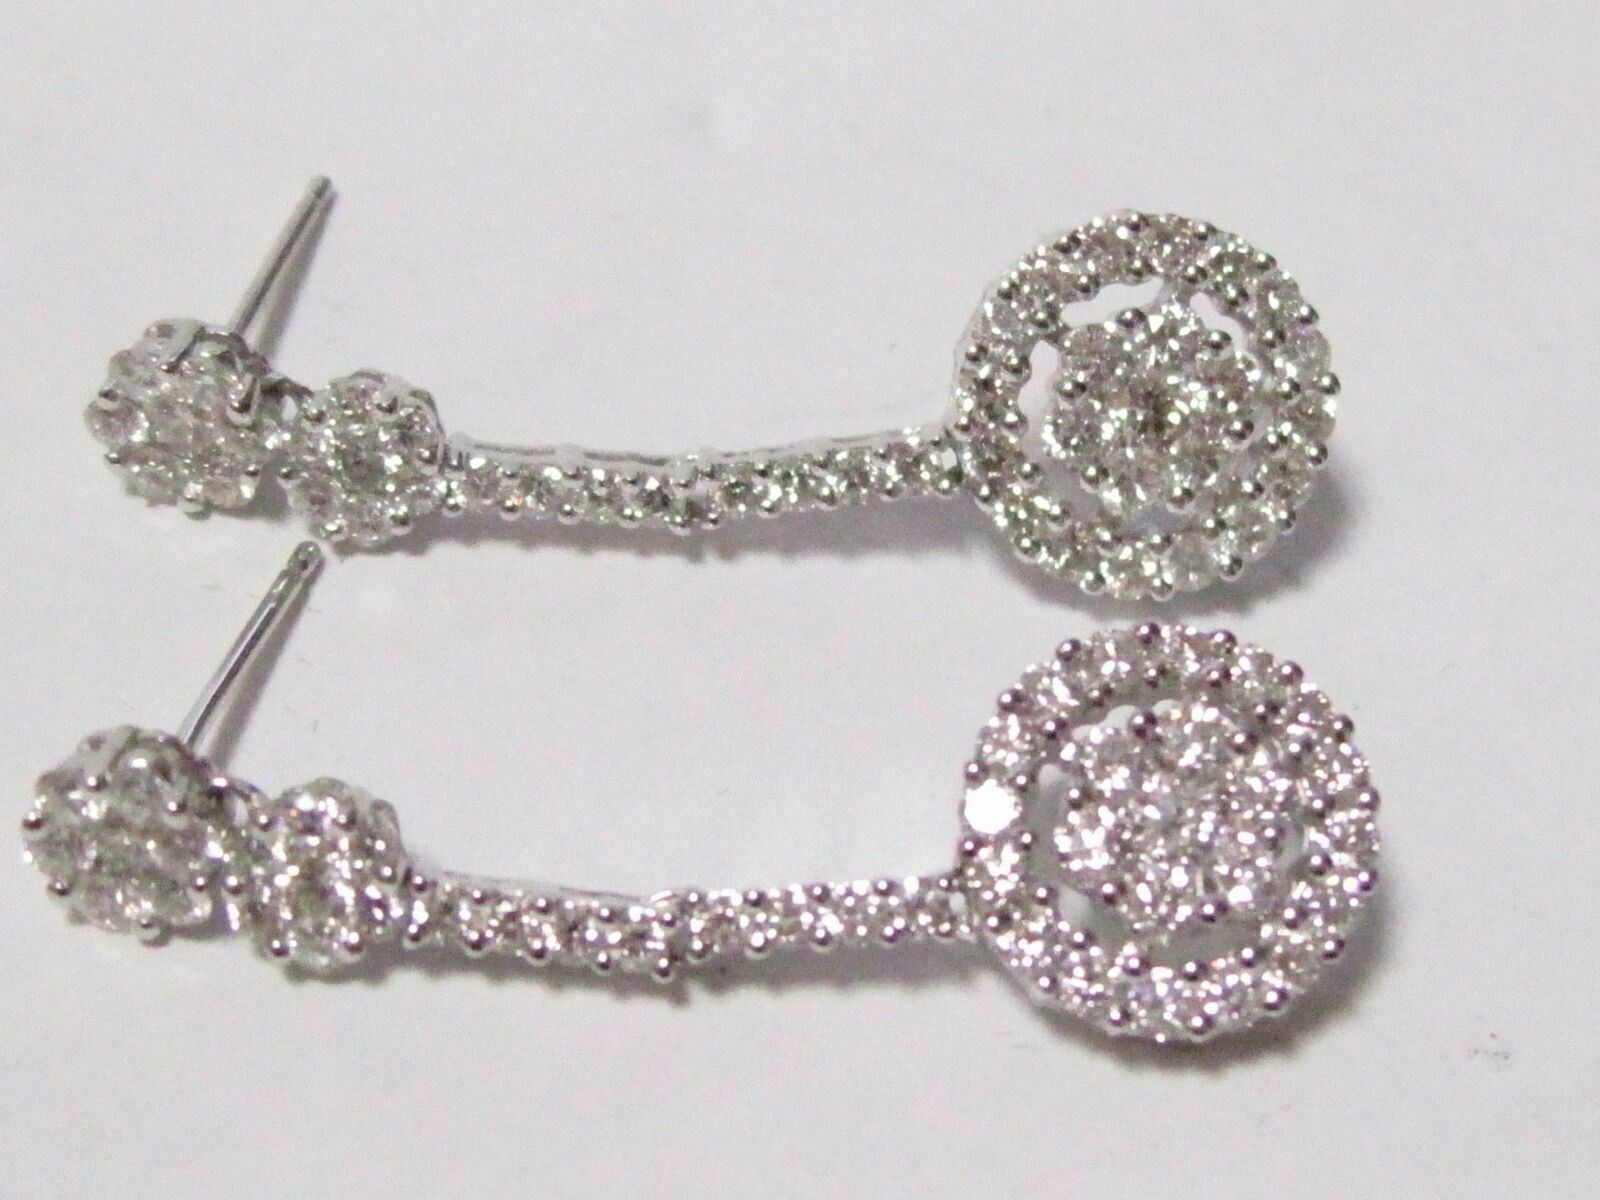 3.05 TCW Round Diamond Circle Shape Drop Dangling Earrings G VS2 14k White Gold